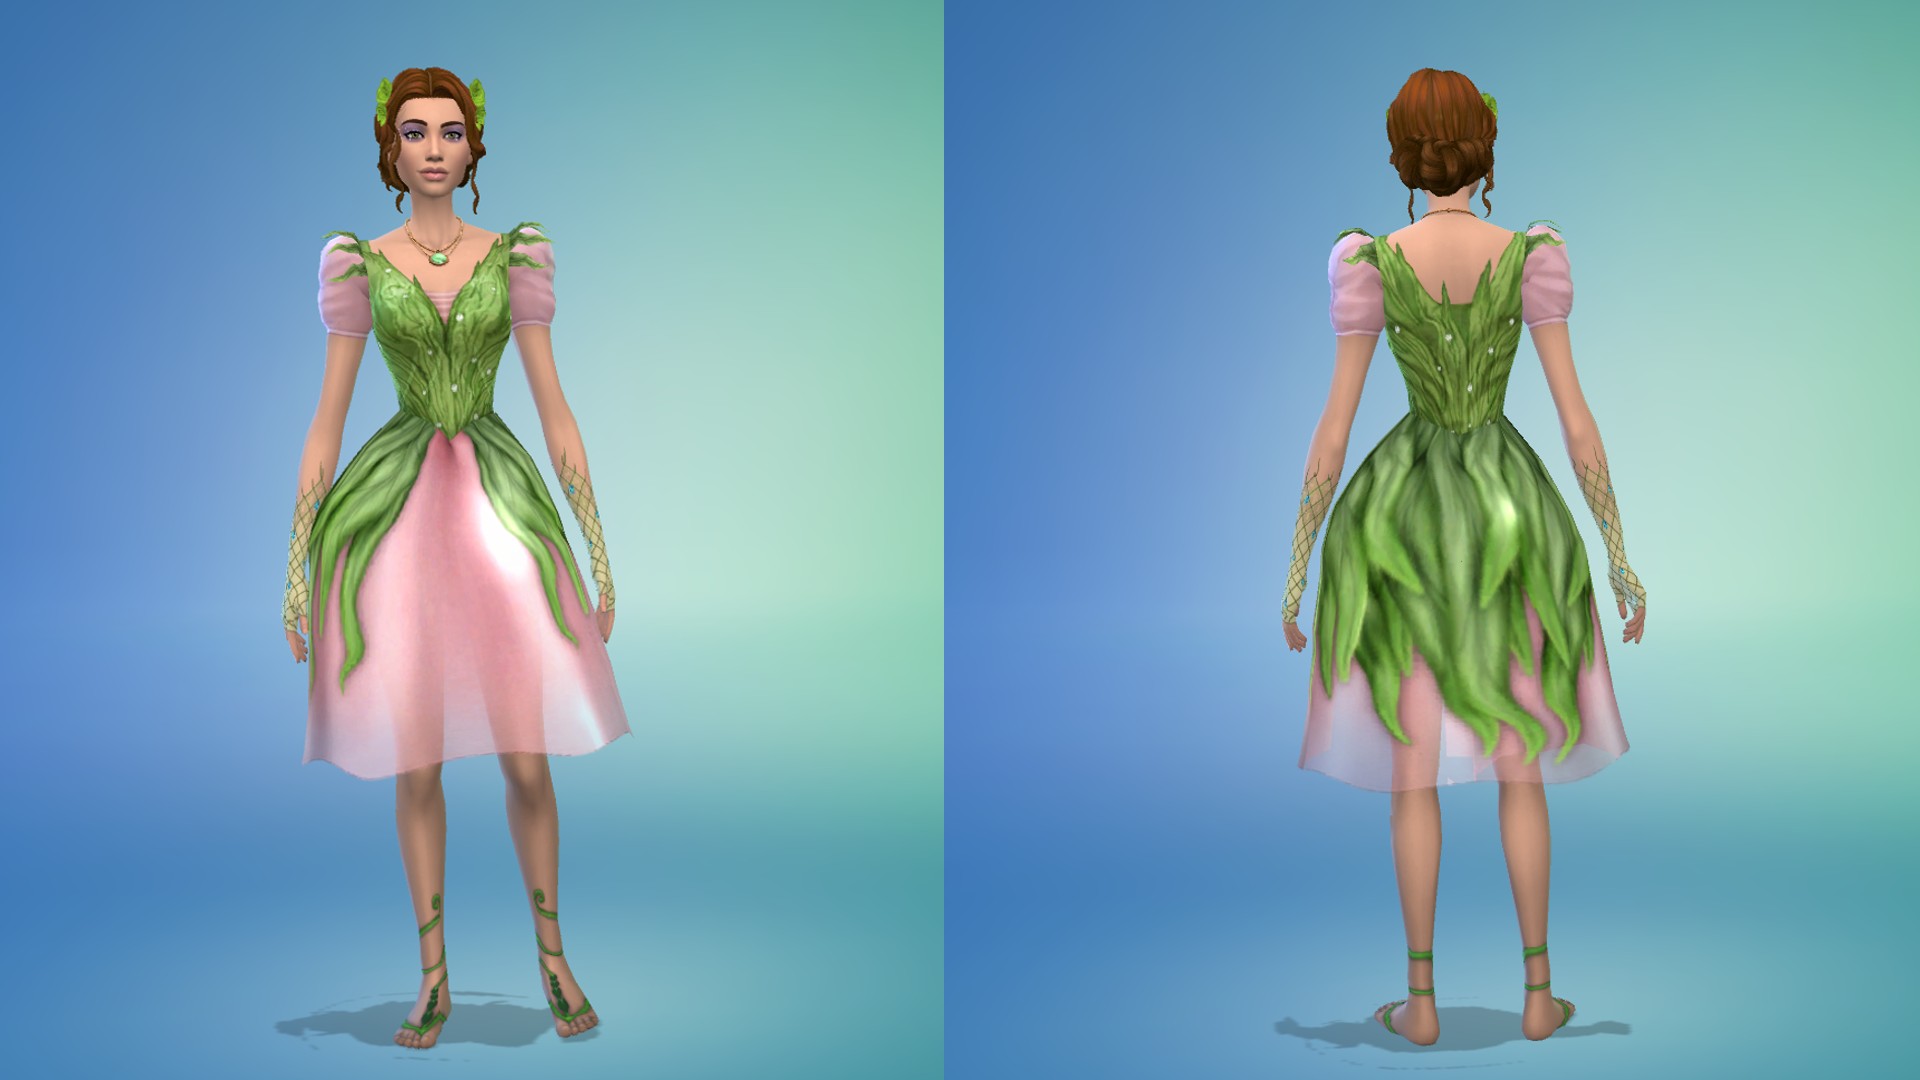 Les Sims 4 Cottage Fae robe mod